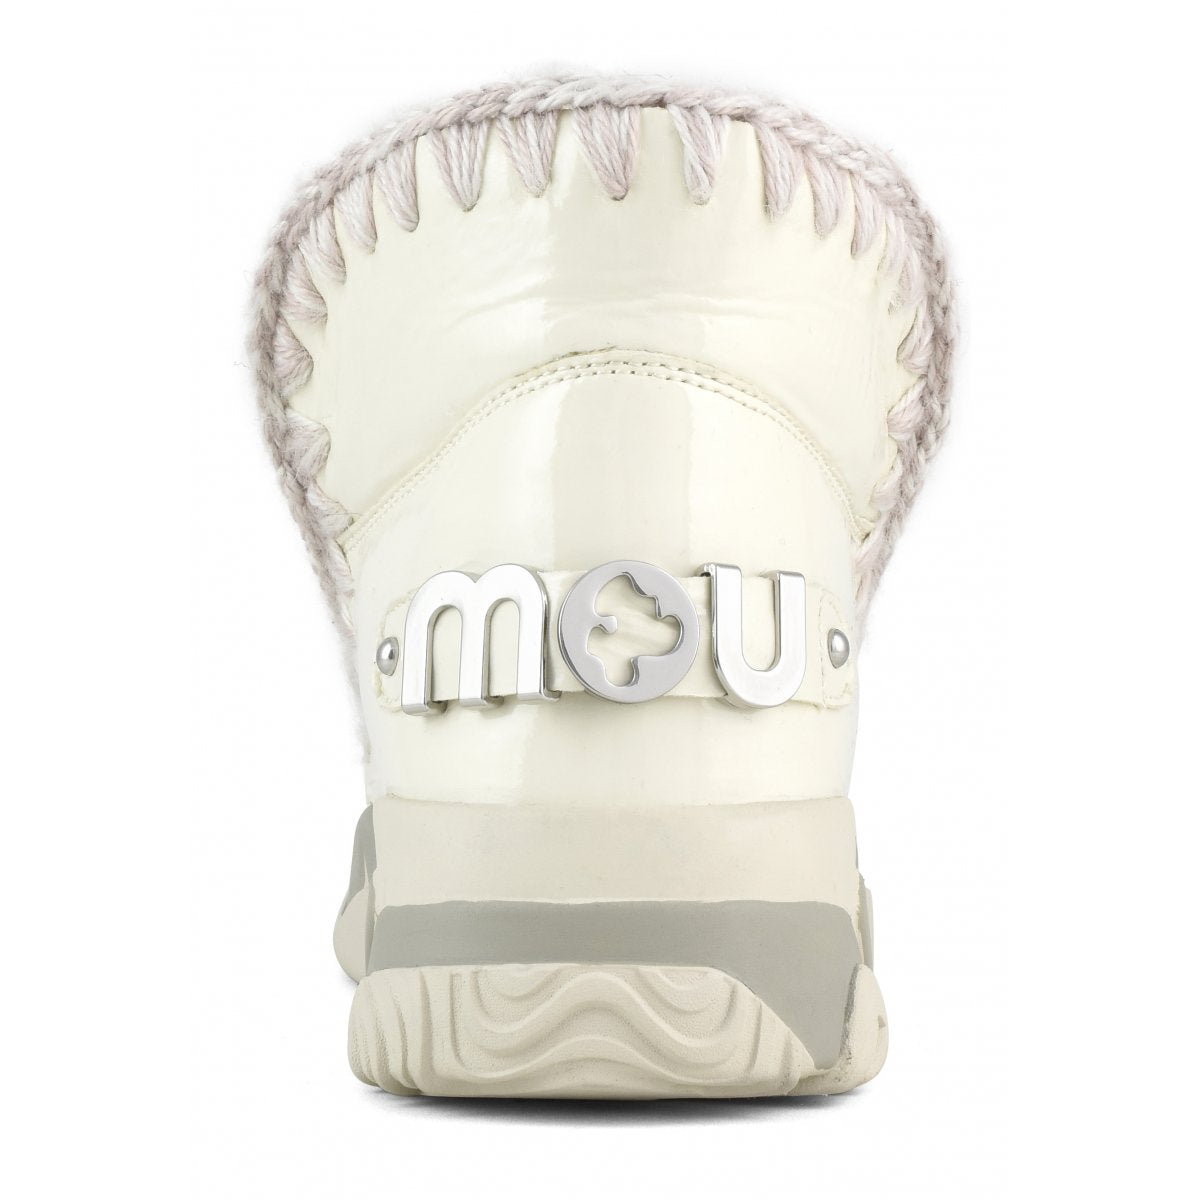 MU.FW201005C - Eskimo trainer - Accessori calzature